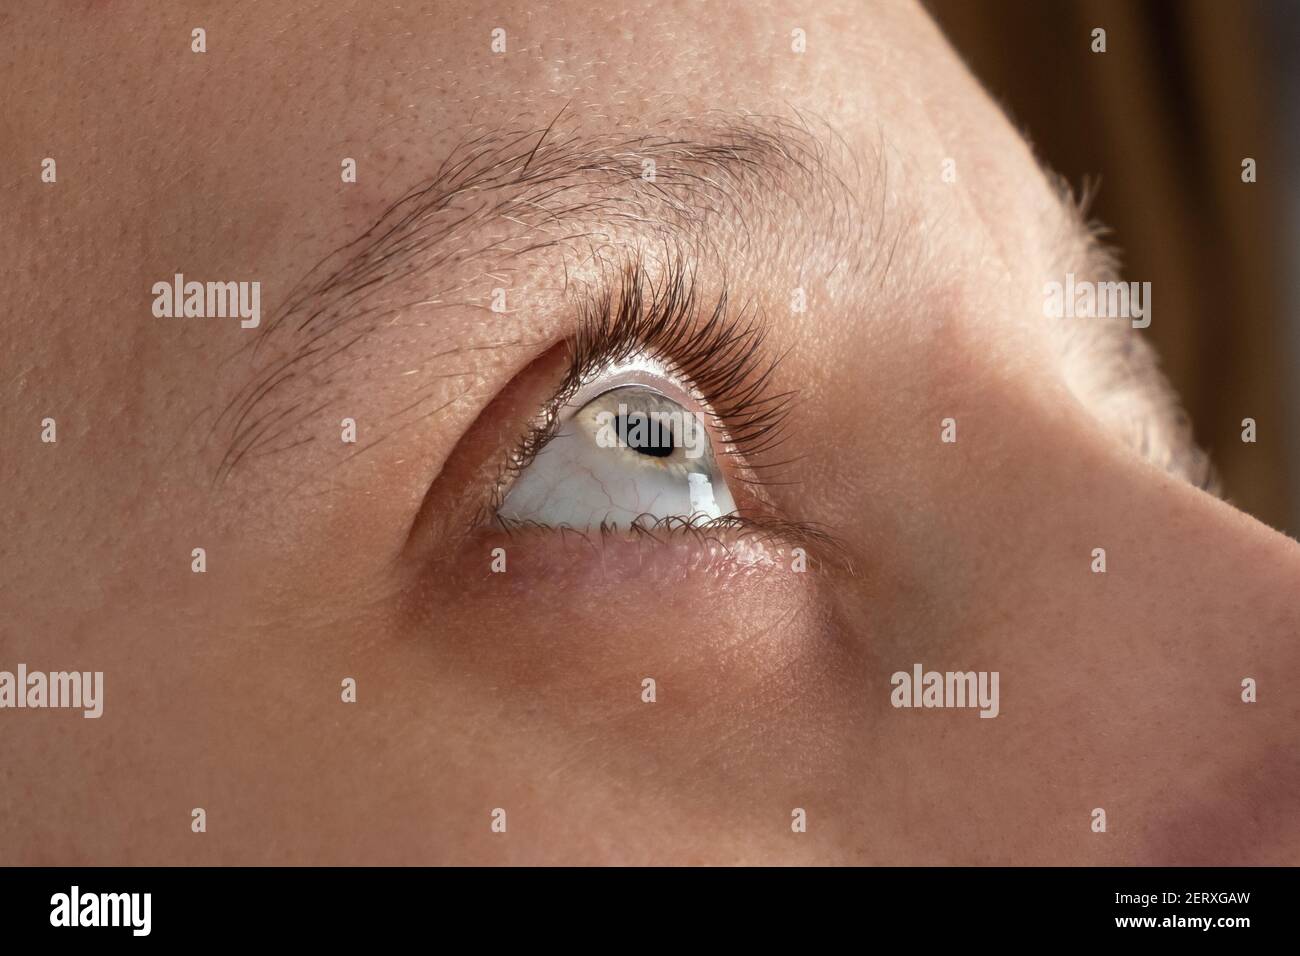 woman eye with corneal dystrophy, keratoconus, thinning of the cornea Stock Photo